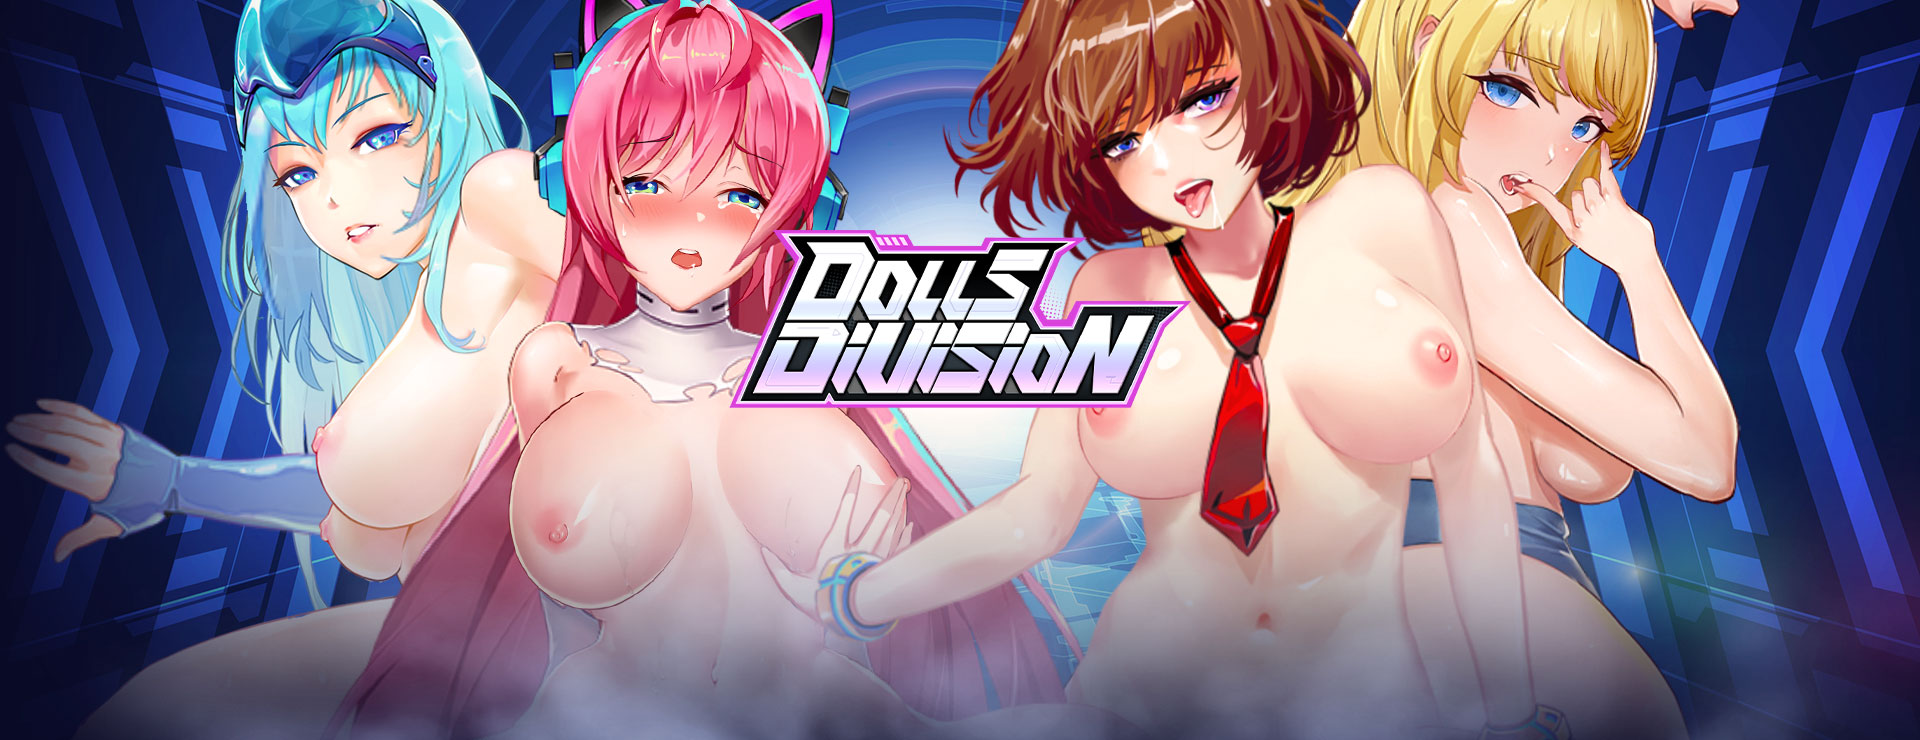 Dolls Division - Action Adventure Spiel